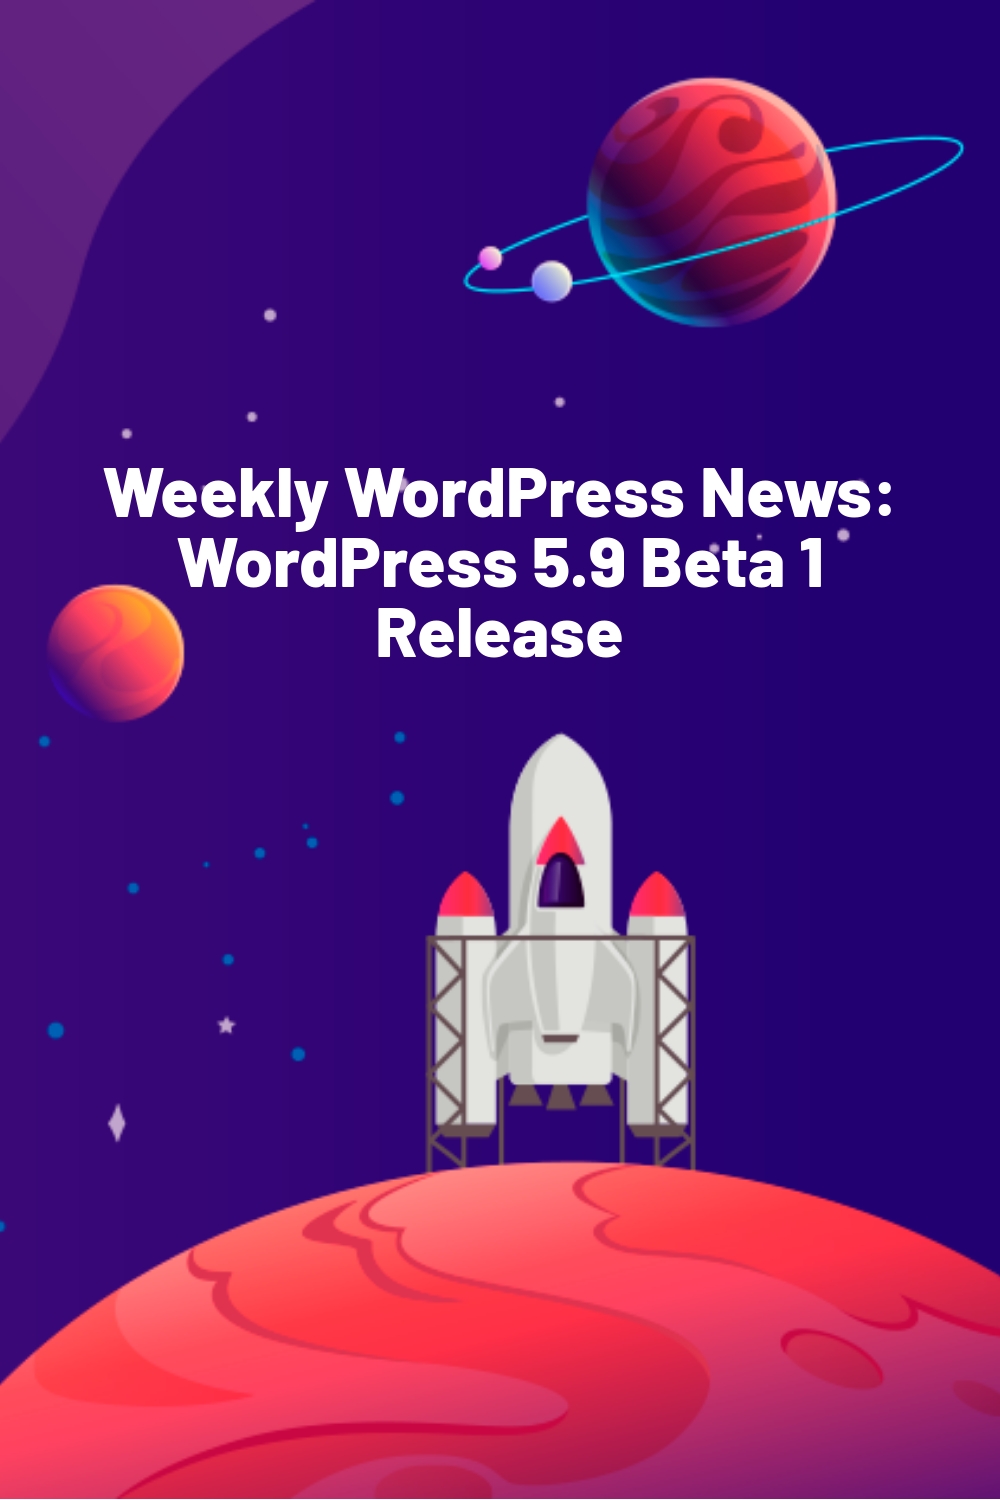 Weekly WordPress News: WordPress 5.9 Beta 1 Release